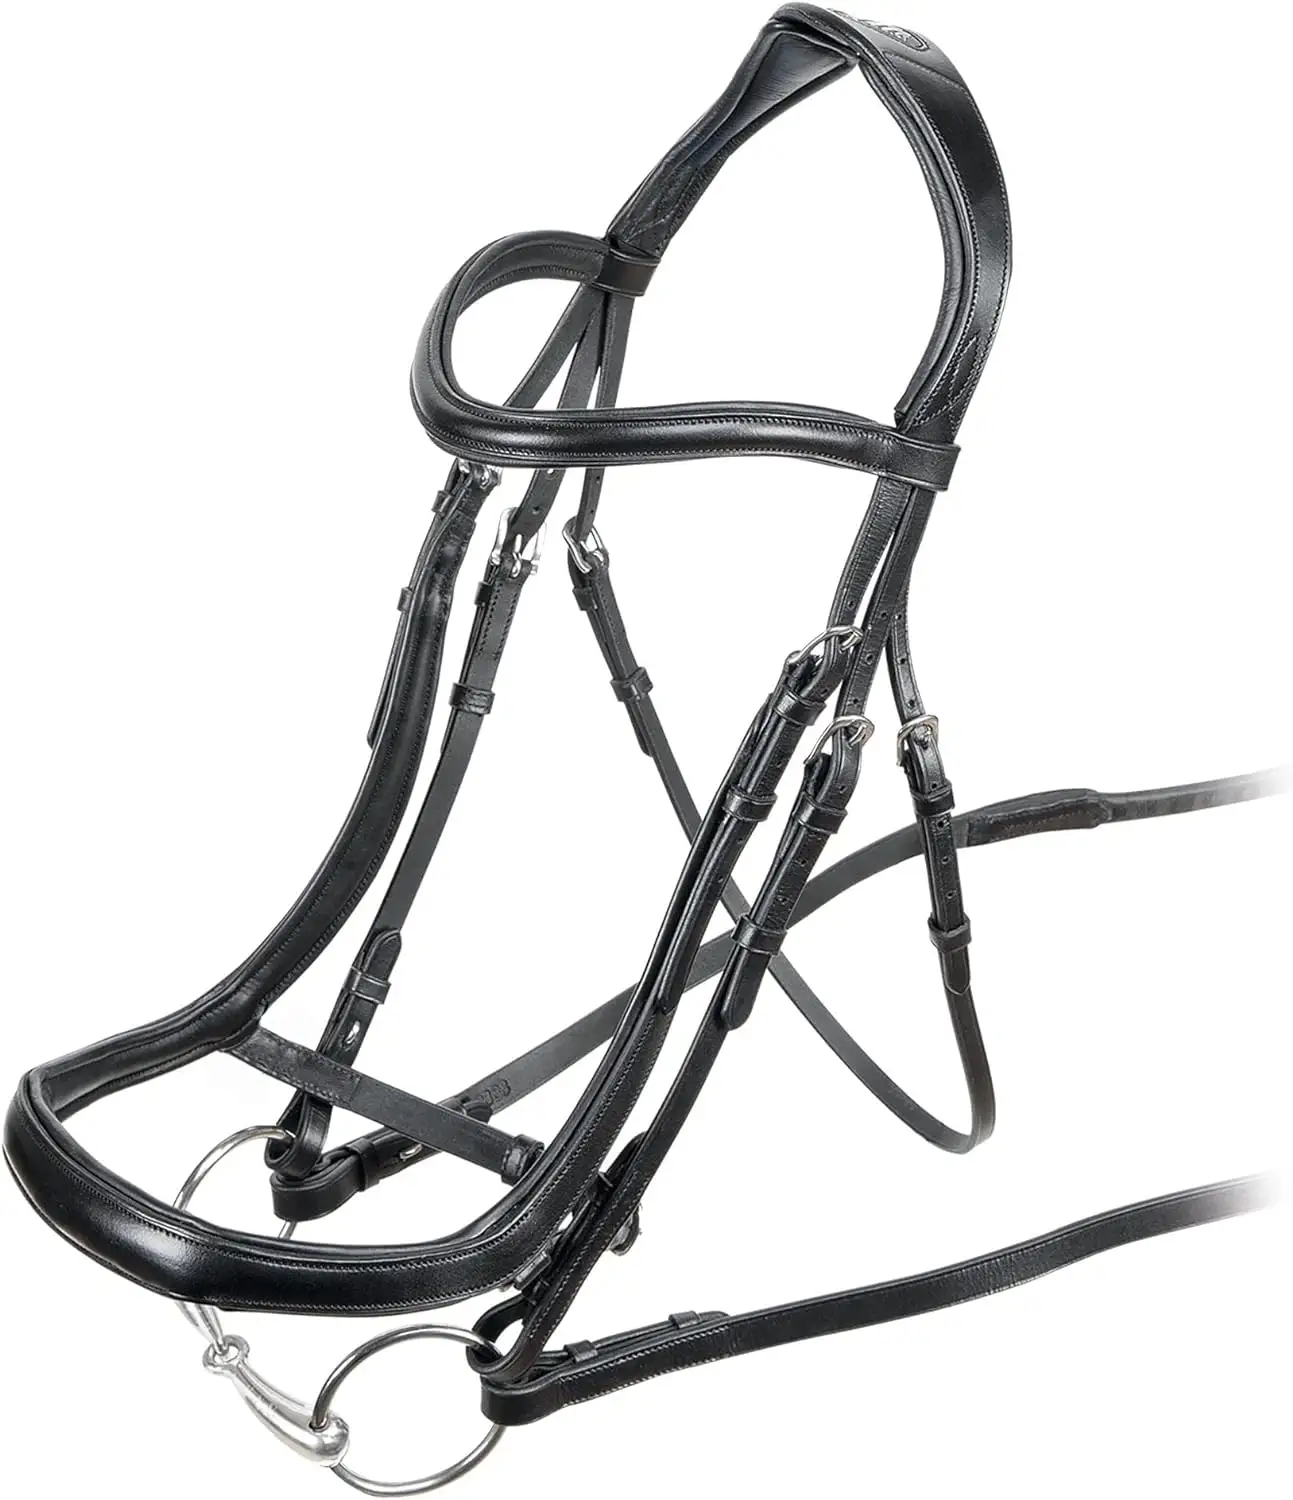 Tali kekang kulit asli warna hitam panas Cavesson ergonomis ukuran penuh grosir baru kualitas tinggi kuda